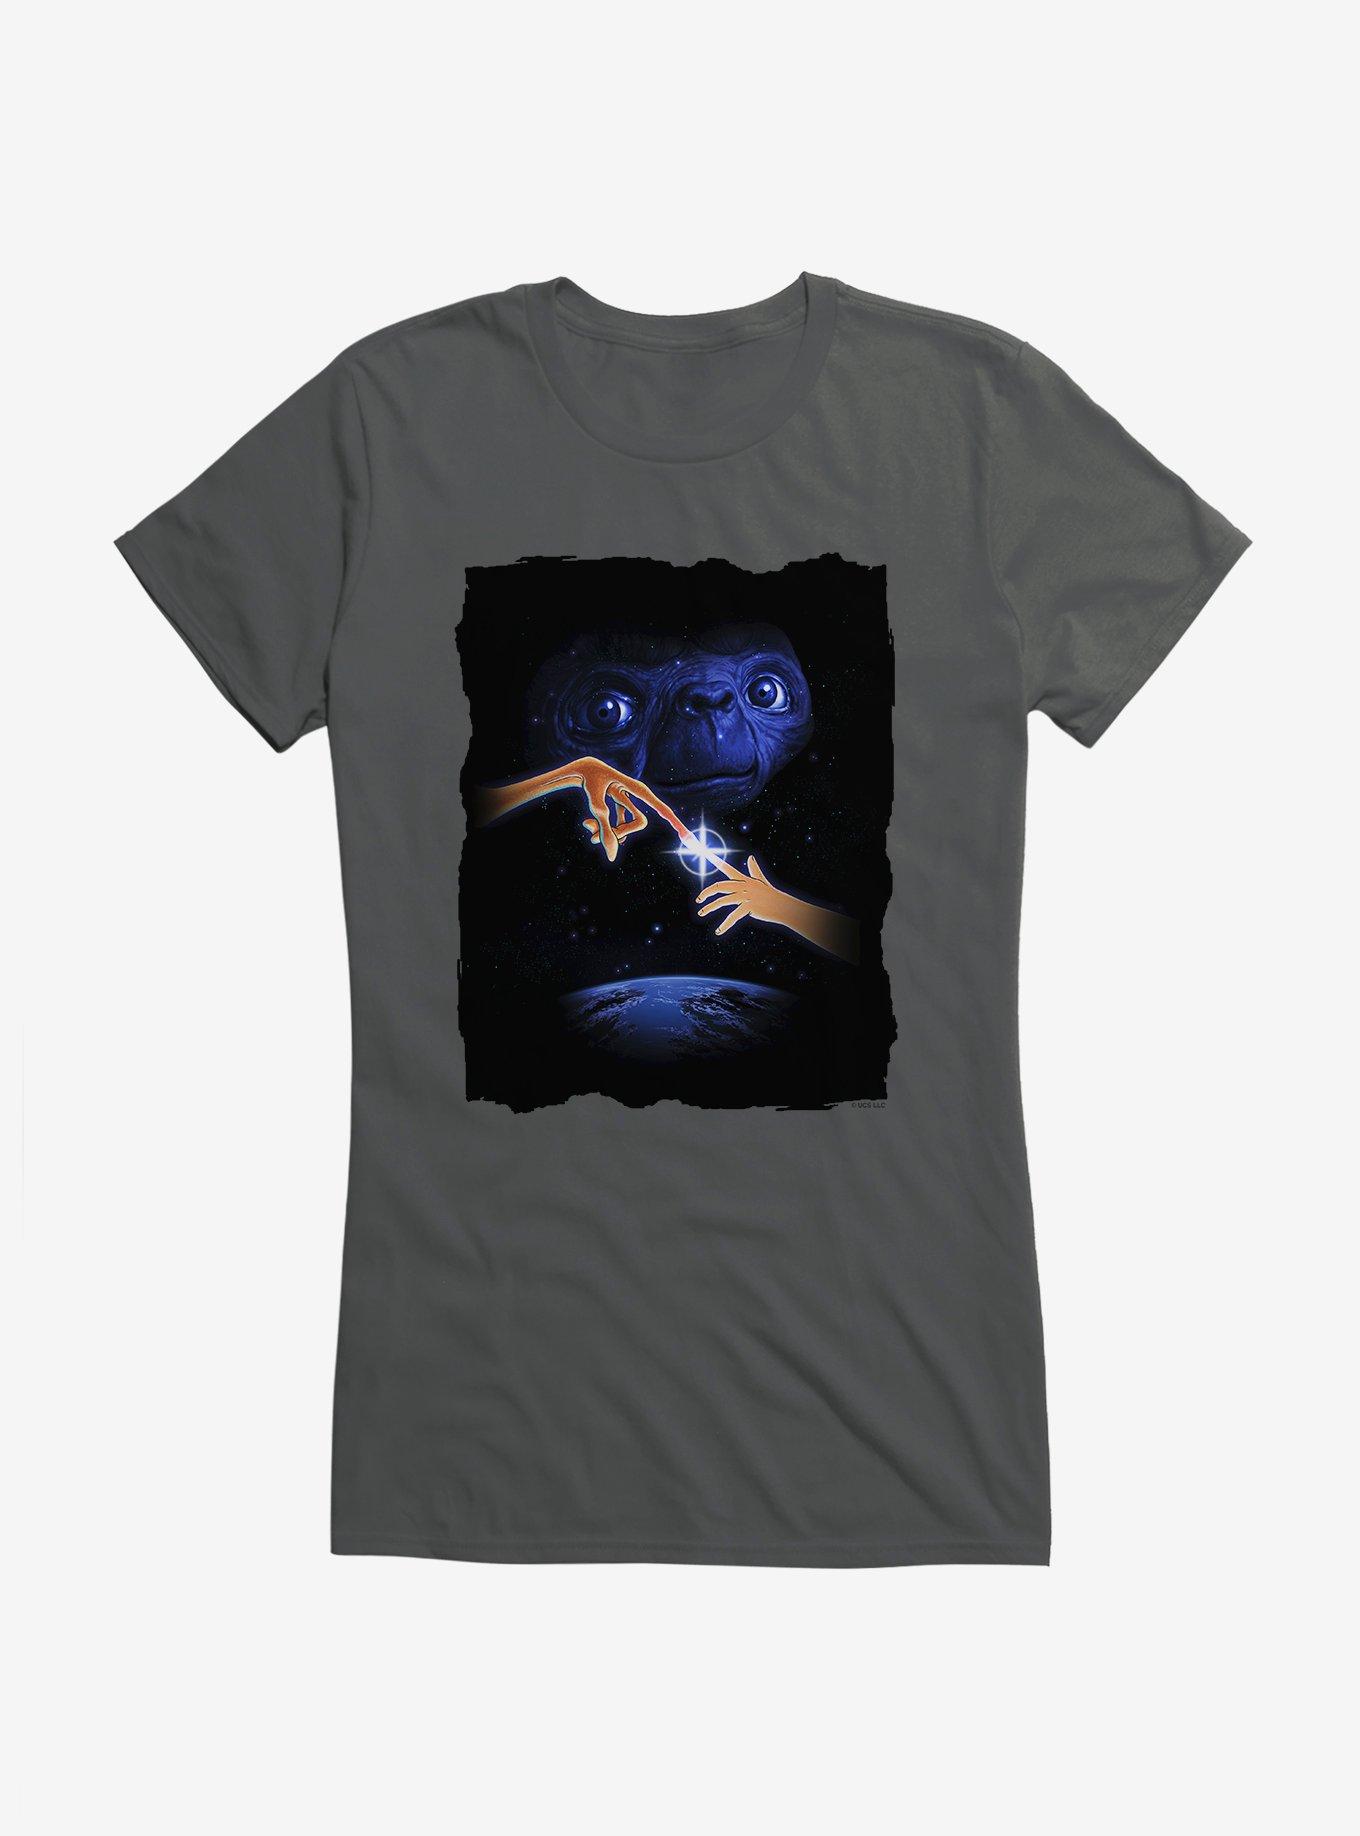 E.T. 40th Anniversary Illuminating Finger Touch Girls T-Shirt